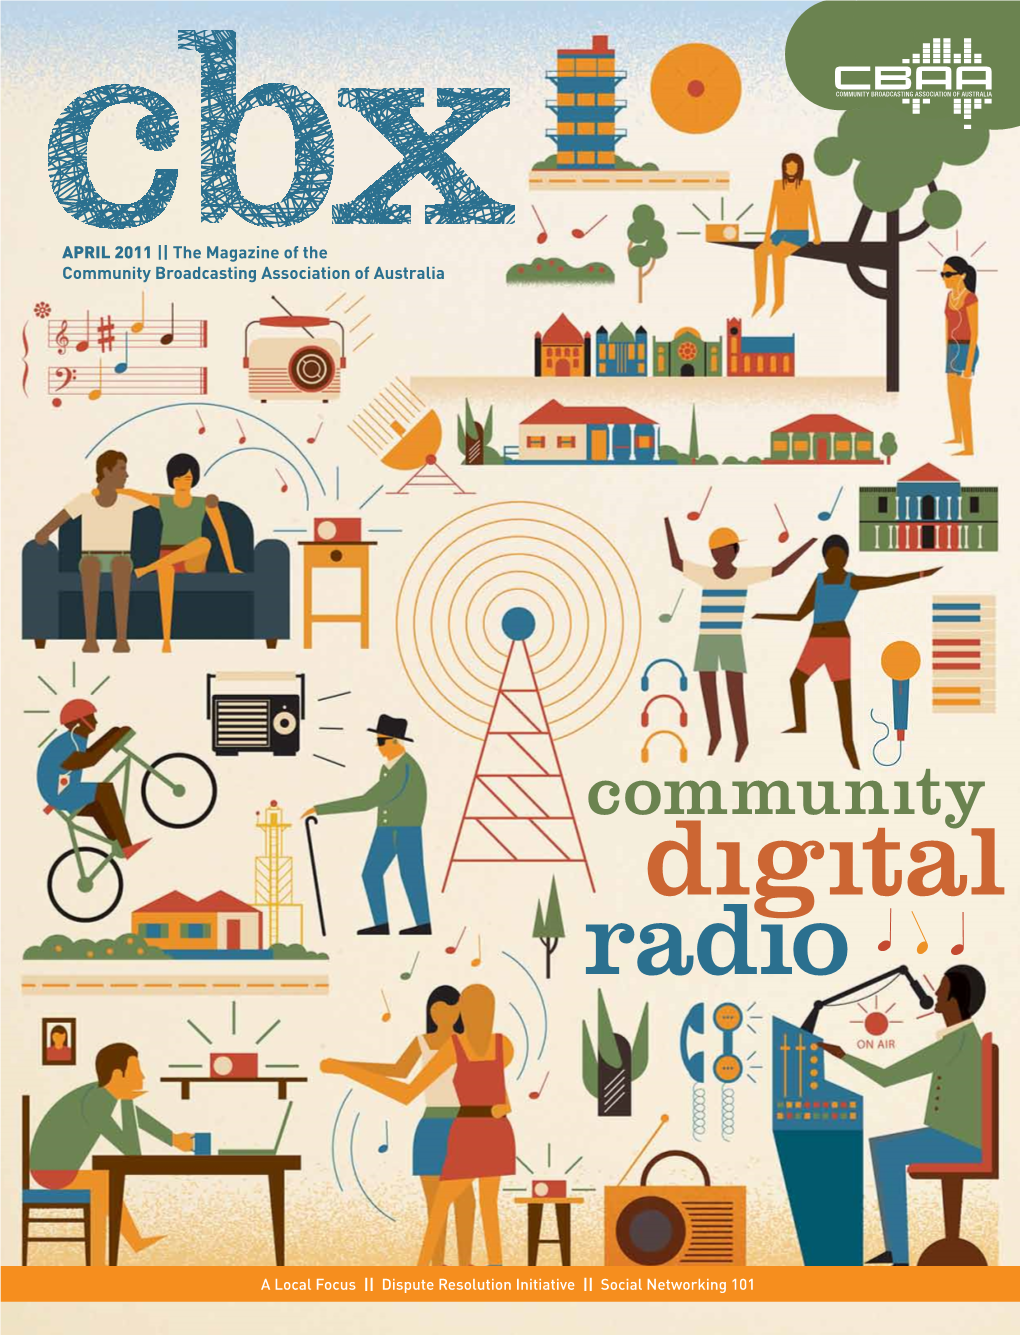 APRIL 2011 || the Magazine of the Community Broadcasting Association of Australia